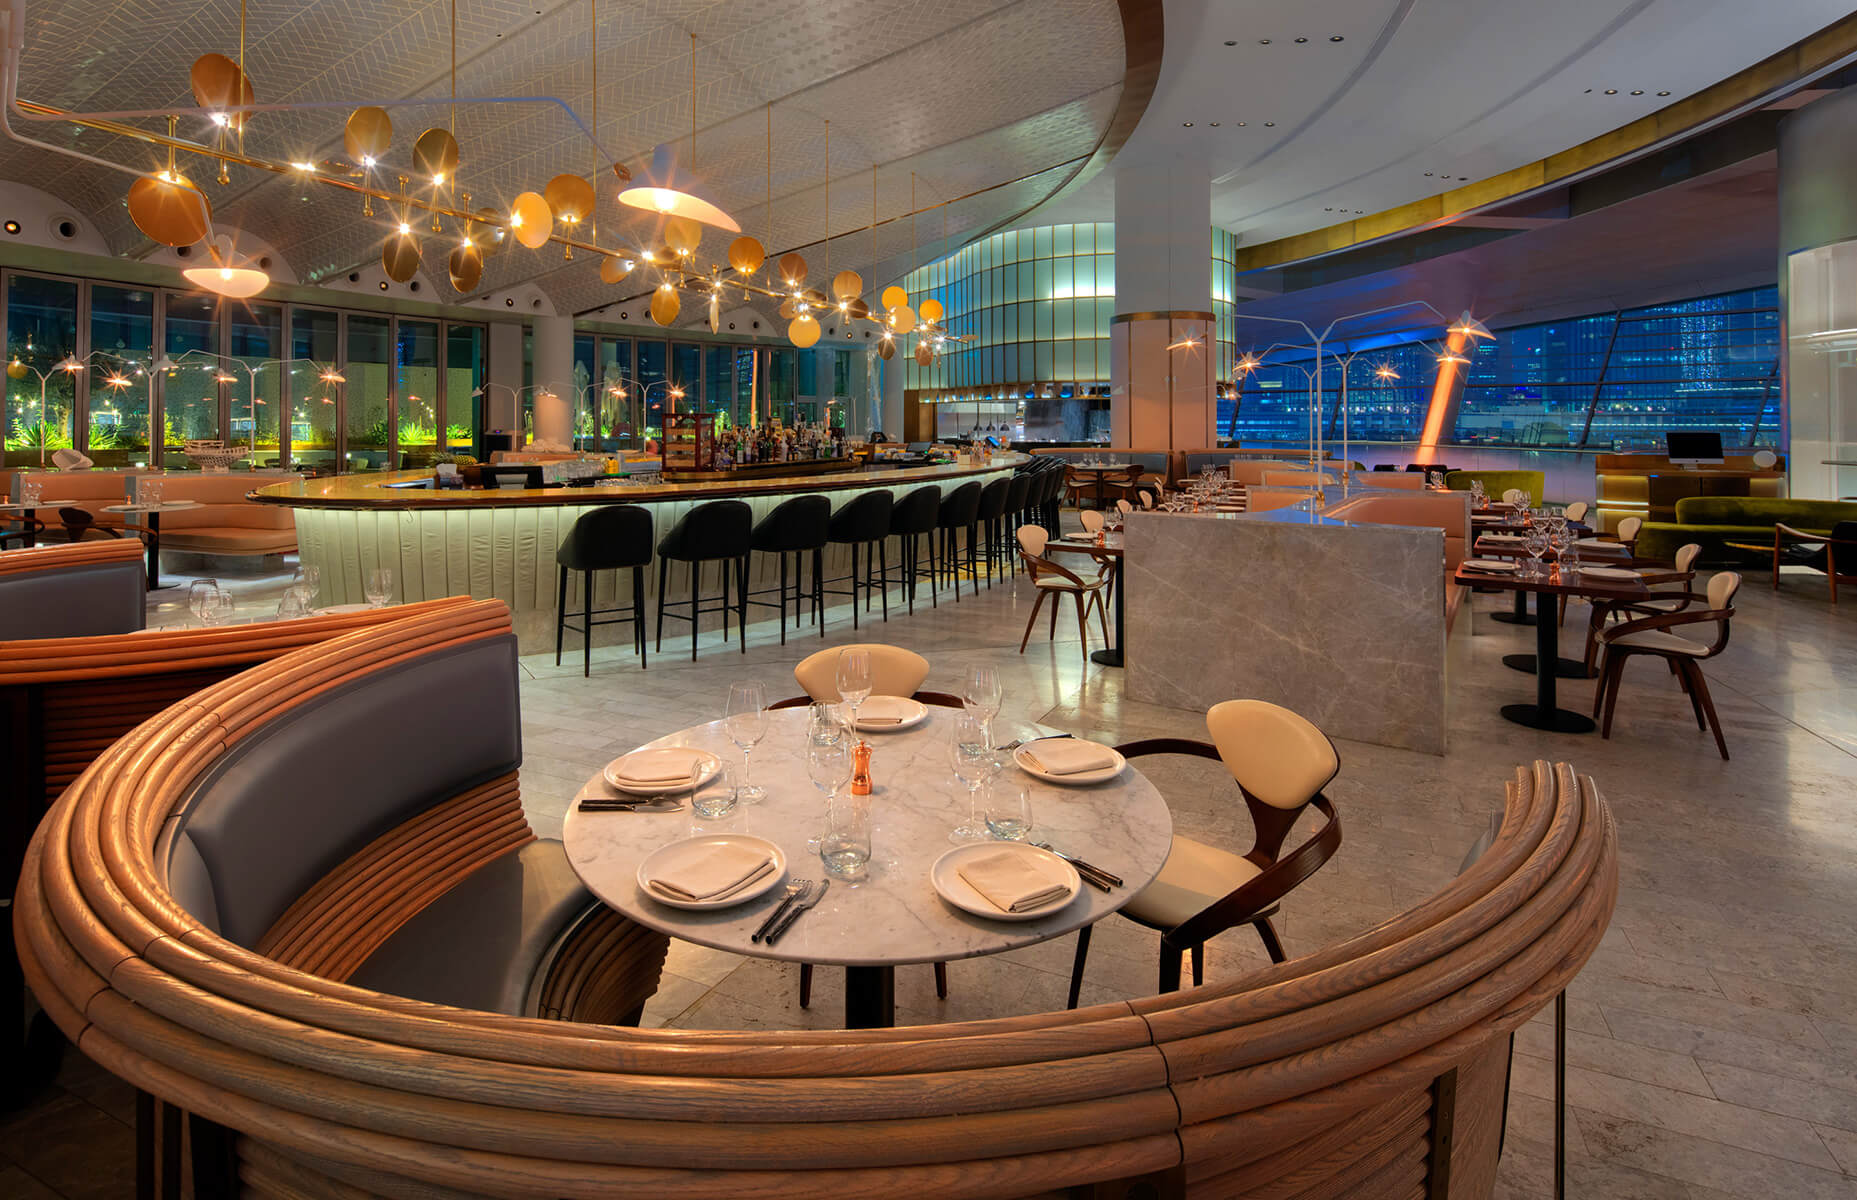 Interior Photography Dubai: Dubai Opera House Restaurant: Point of View